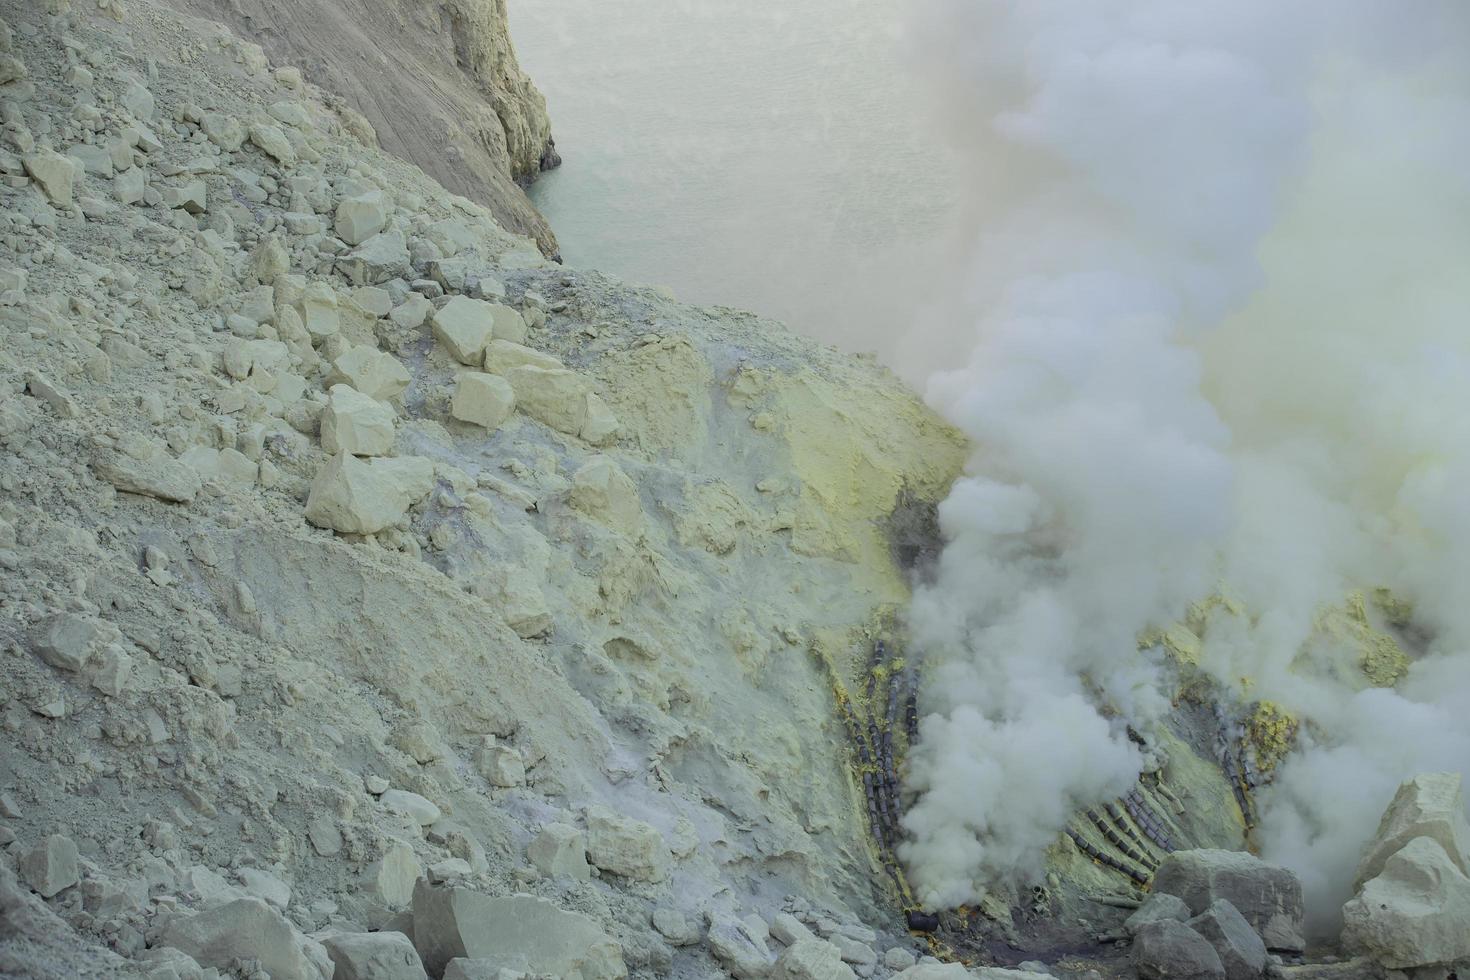 Schwefeldämpfe aus dem Krater des Vulkans Kawah Ijen, Indonesien foto